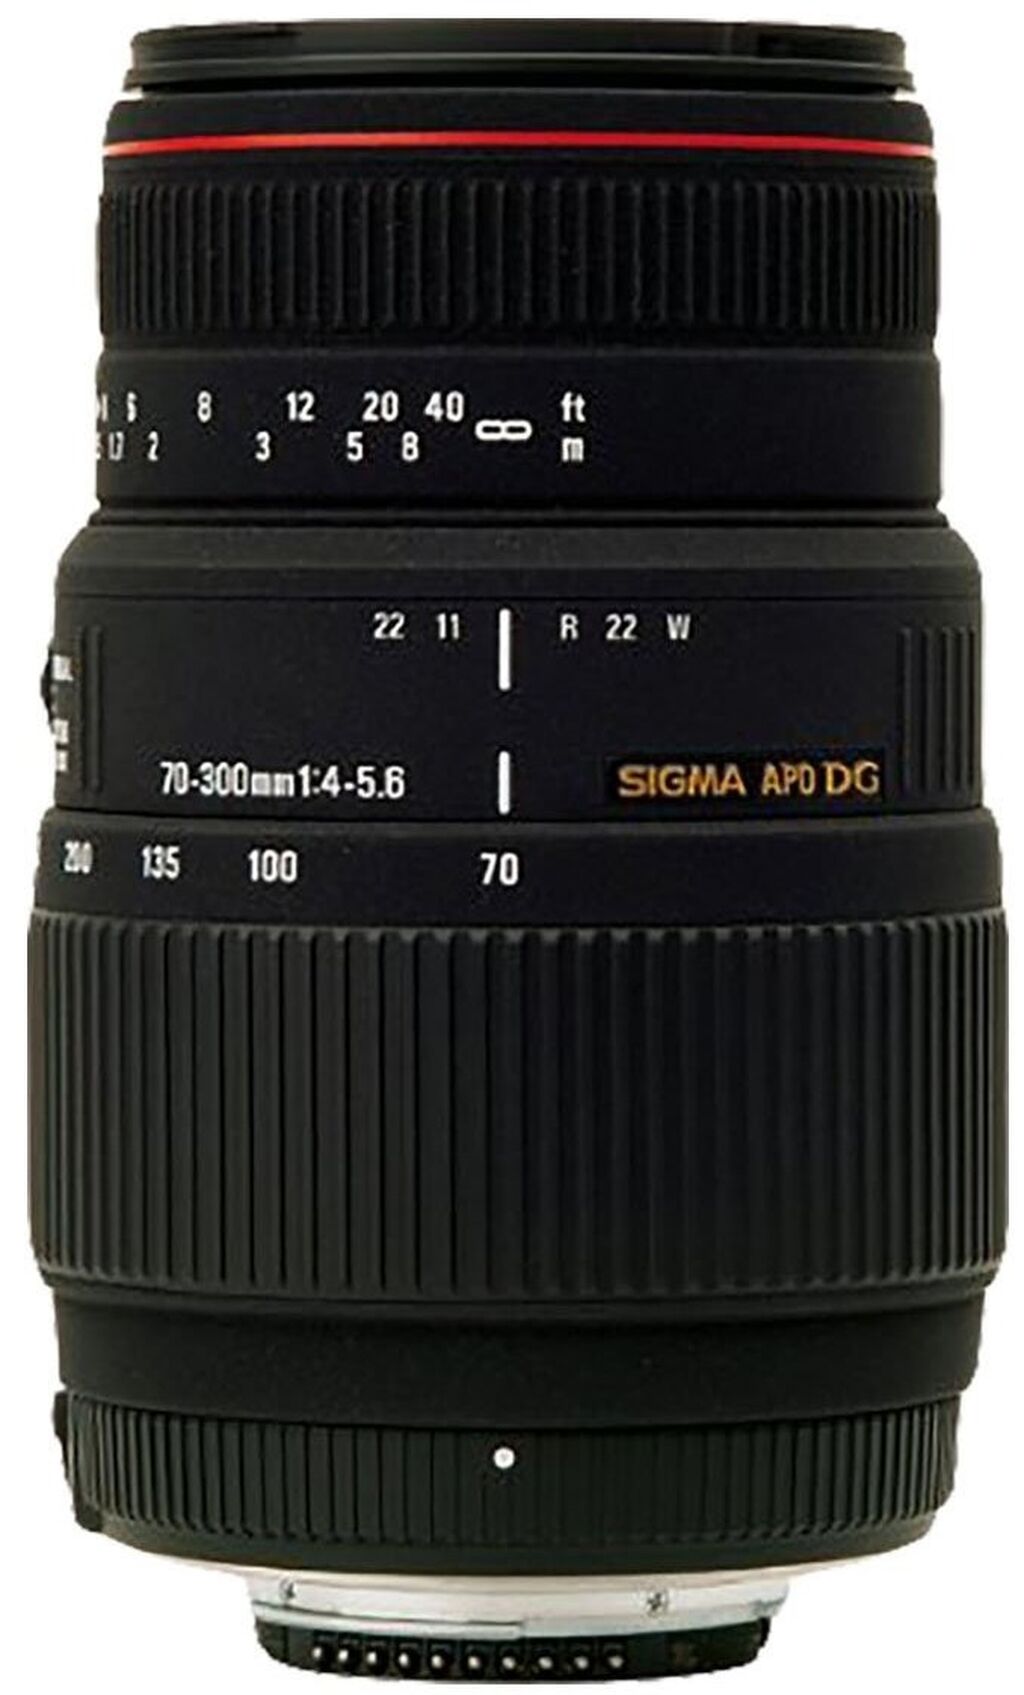 Sigma com. Sigma 70-300 4-5.6 Nikon. Sigma 70-300mm d 1:4-5.6 apo DG. Sigma af 70-300mm f/4-5.6 apo macro DG Nikon f. 70-300 DG macro 4-5.6 apo Sigma.